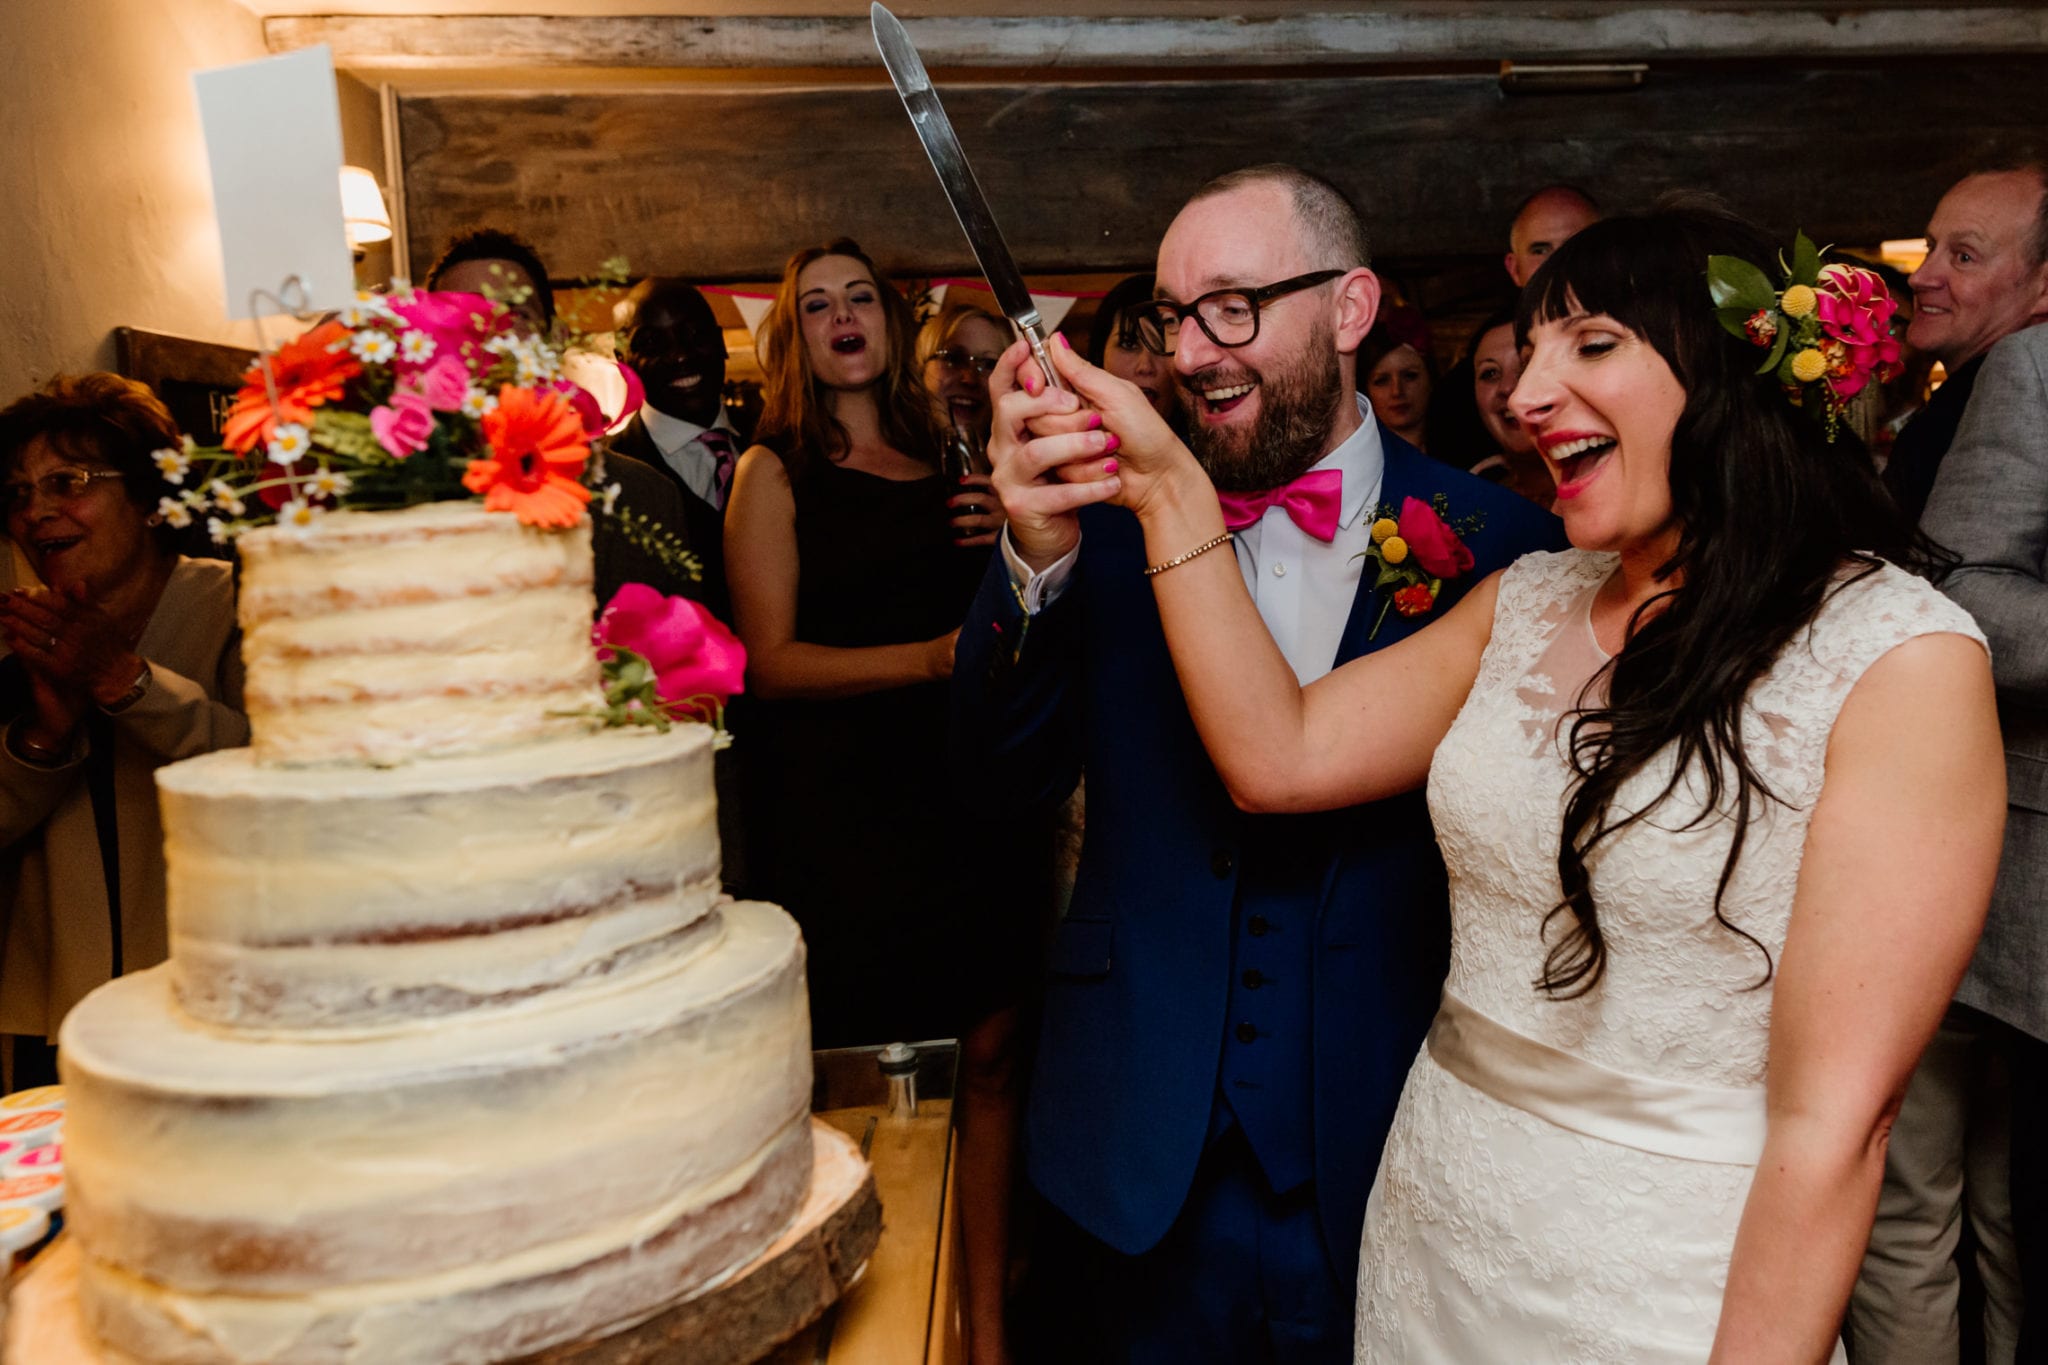 Cake cutting at The Five Bells in Stanbridge wedding - Leighton Buzzard Wedding Photographer